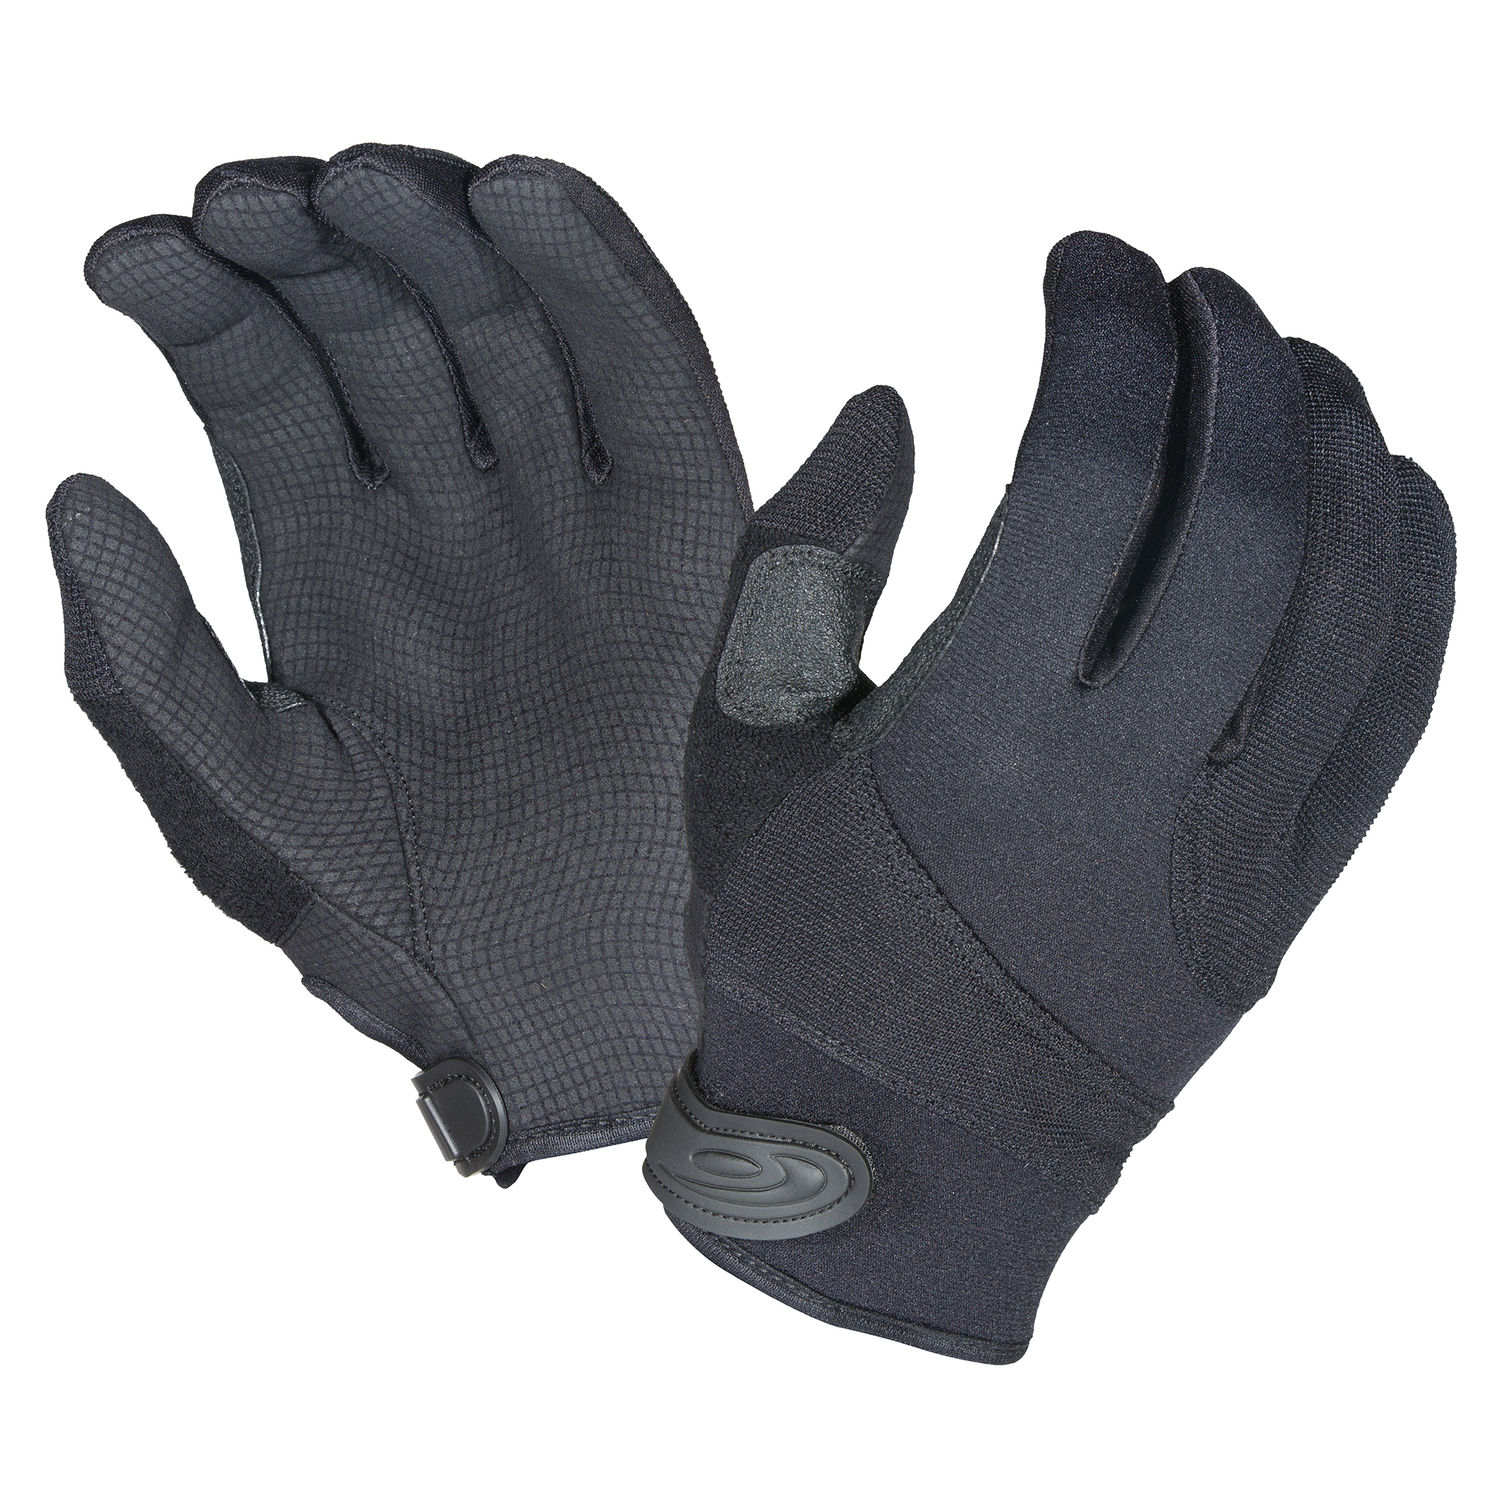 Hatch SGK100 Street Guard Glove with Kevlar